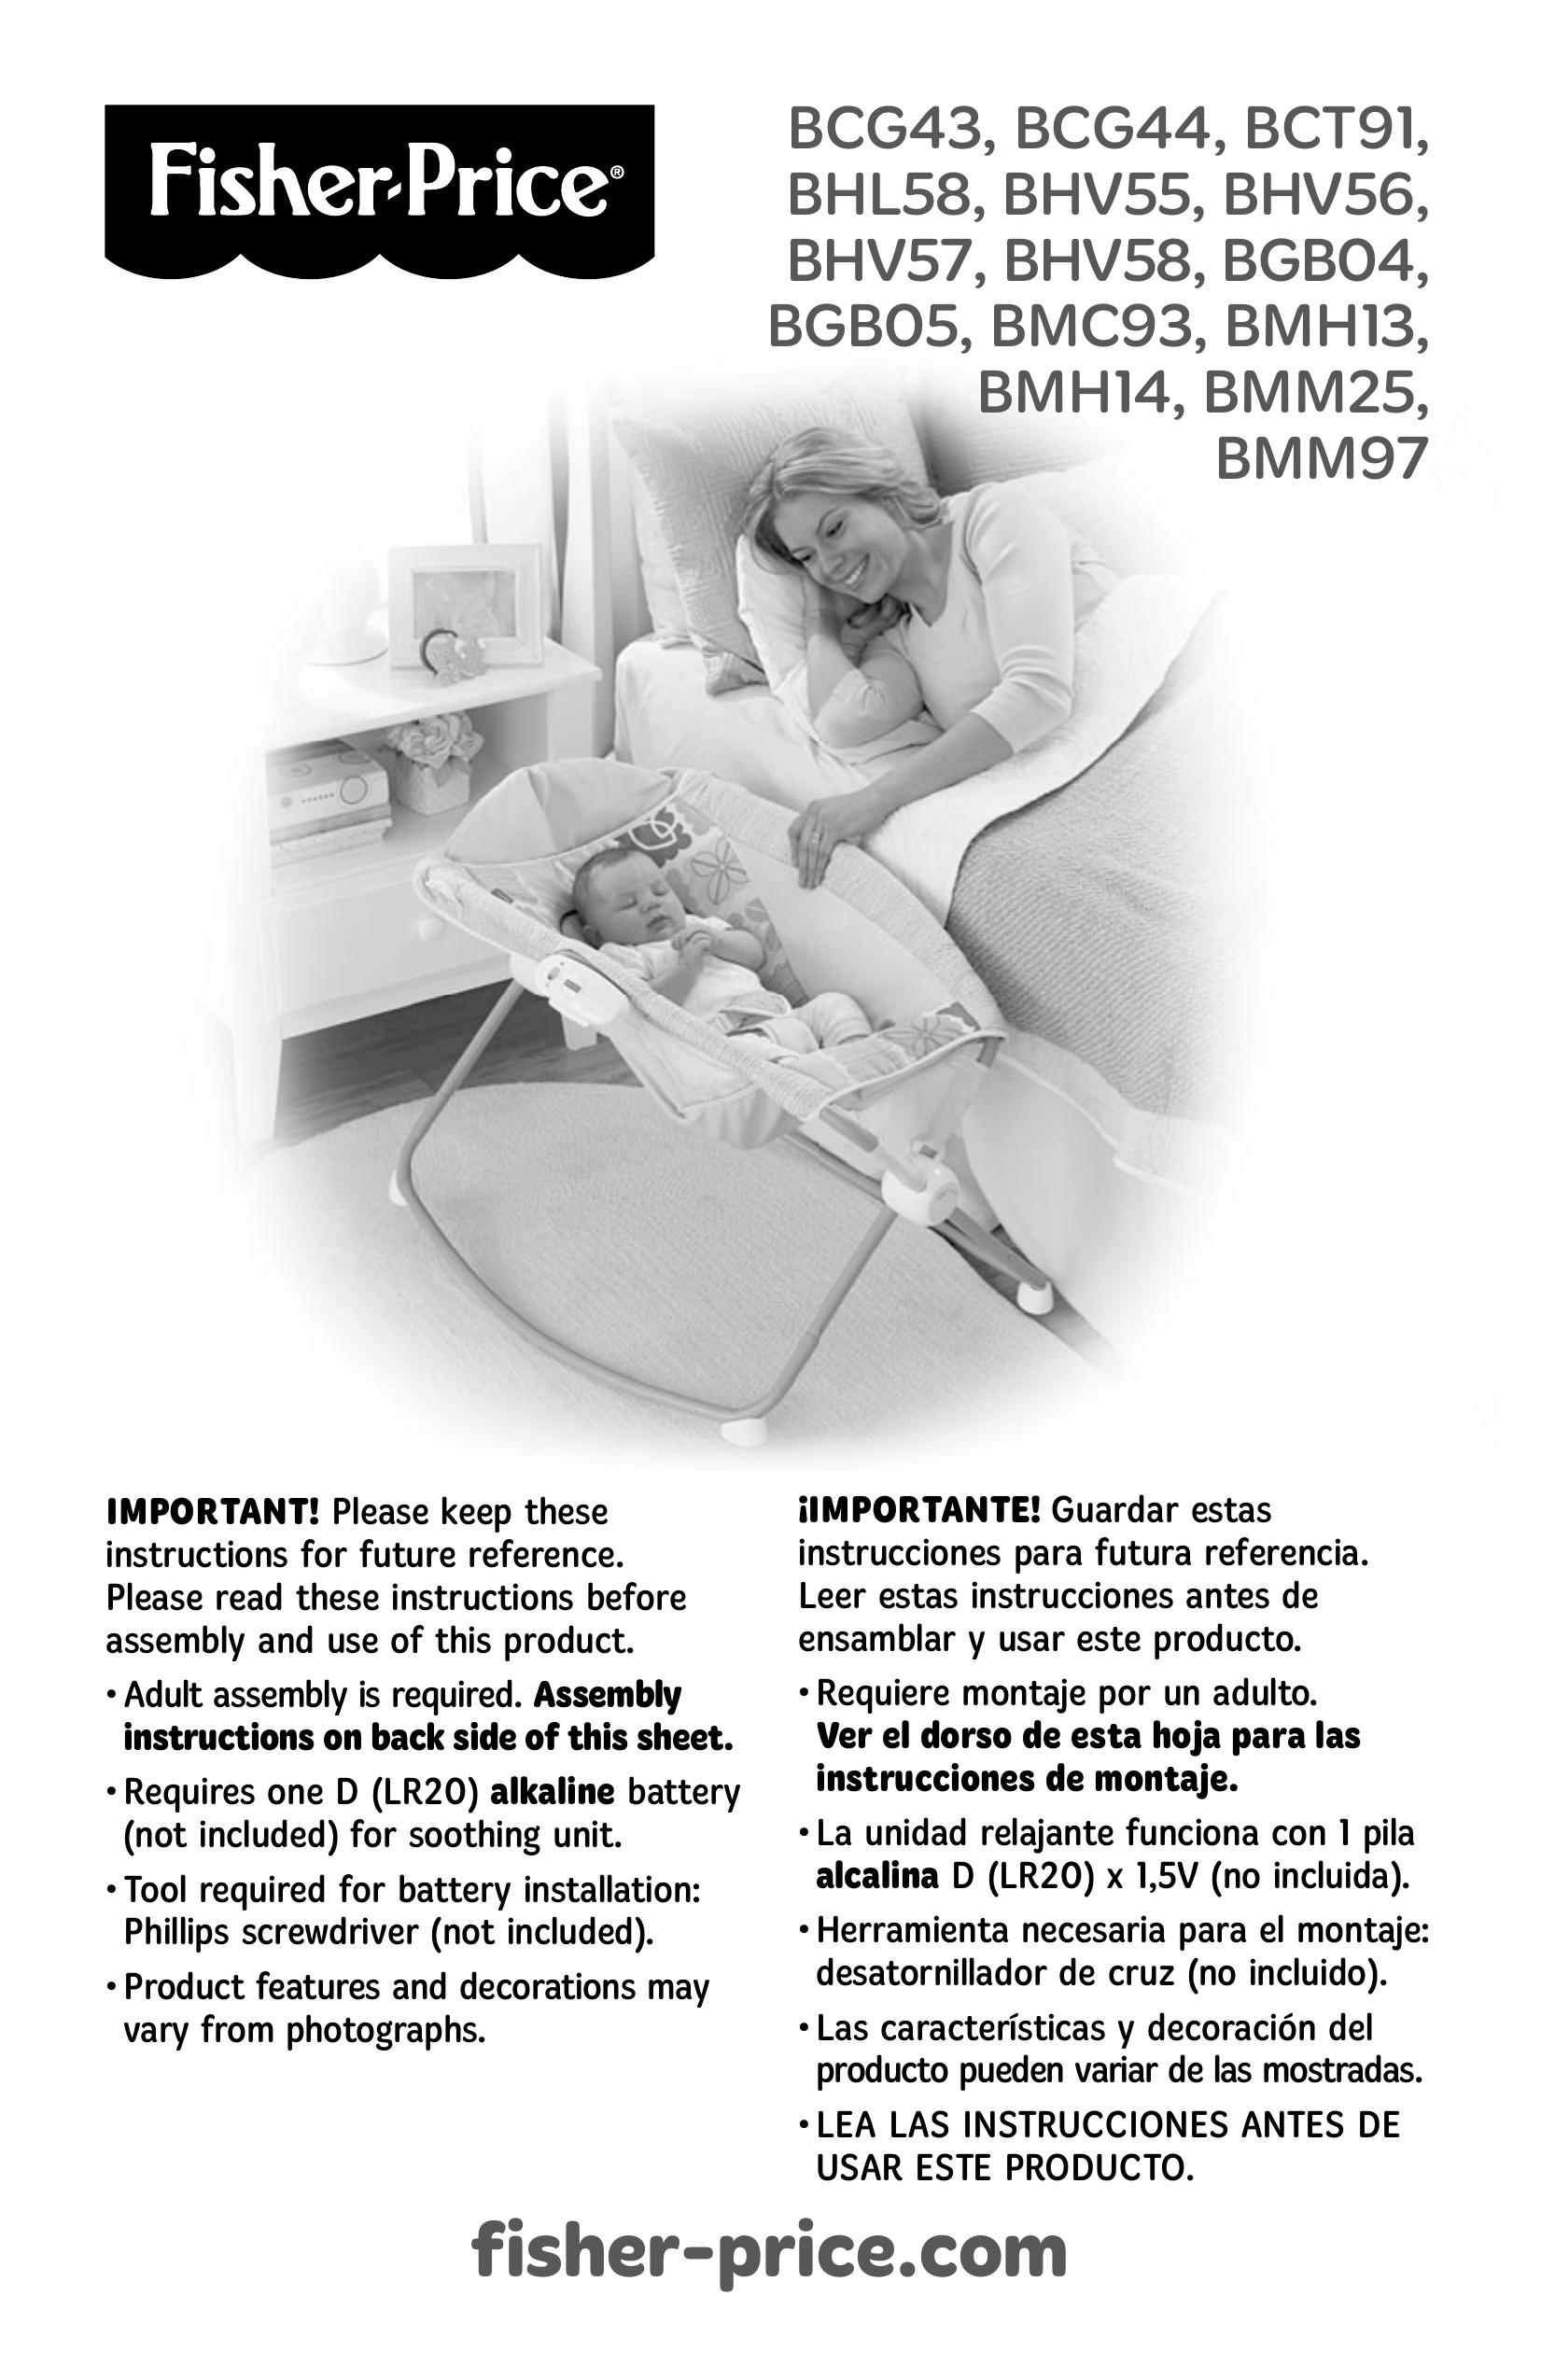 Fisher-Price BHV55 Sleep Apnea Machine User Manual